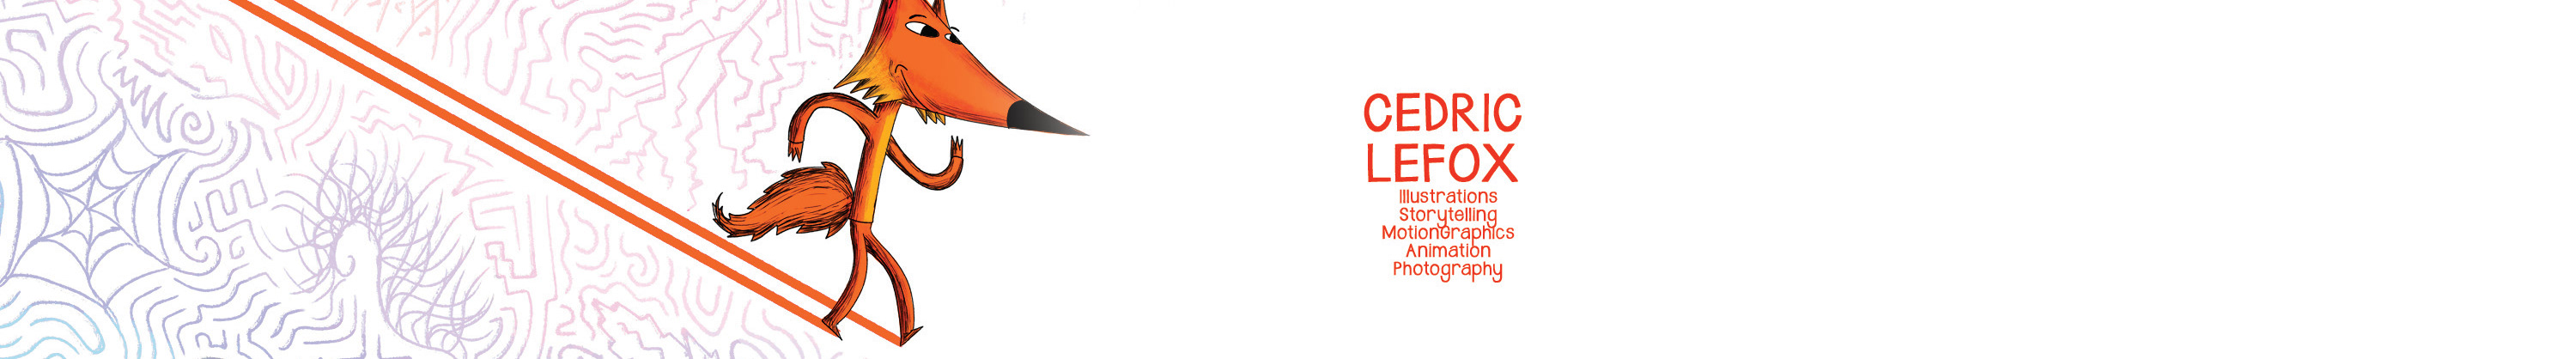 Cedric LeFox's profile banner